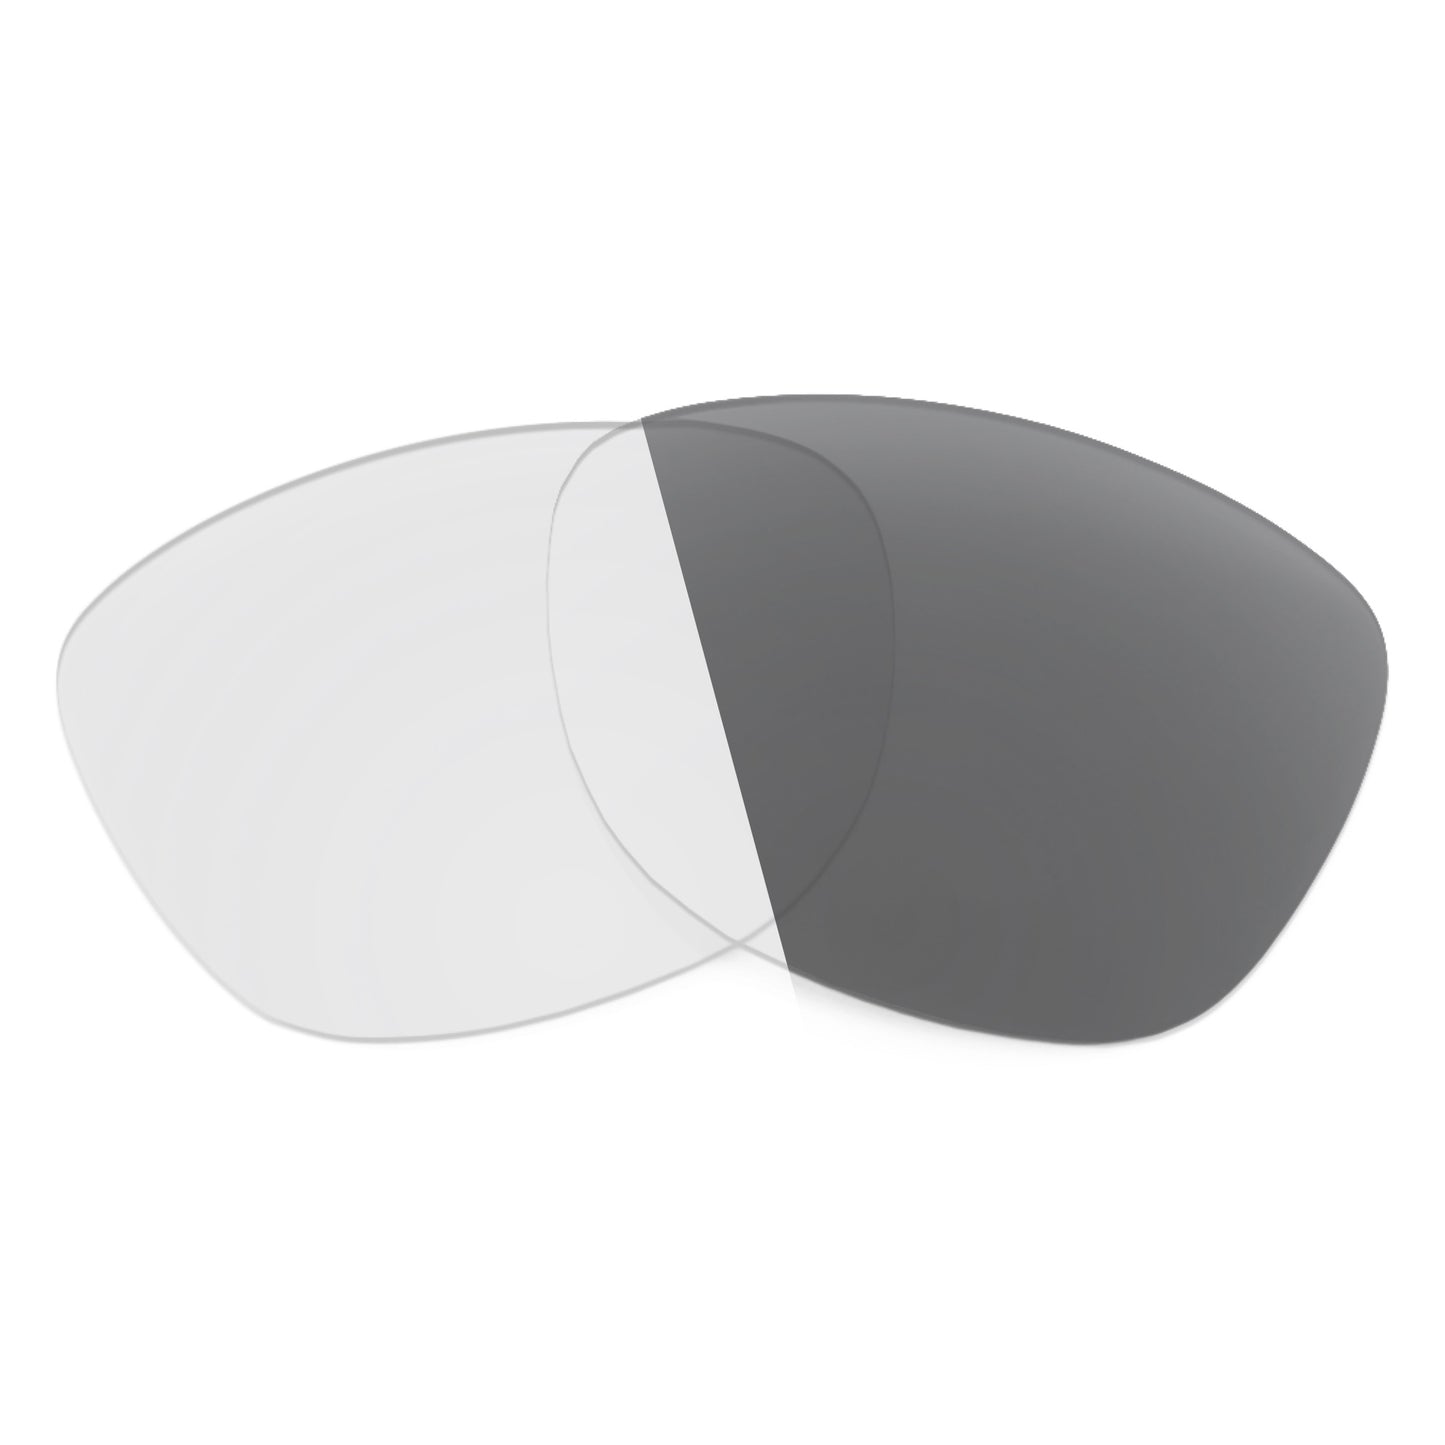 Revant replacement lenses for Spy Optic Hi-Fi Non-Polarized Adapt Gray Photochromic